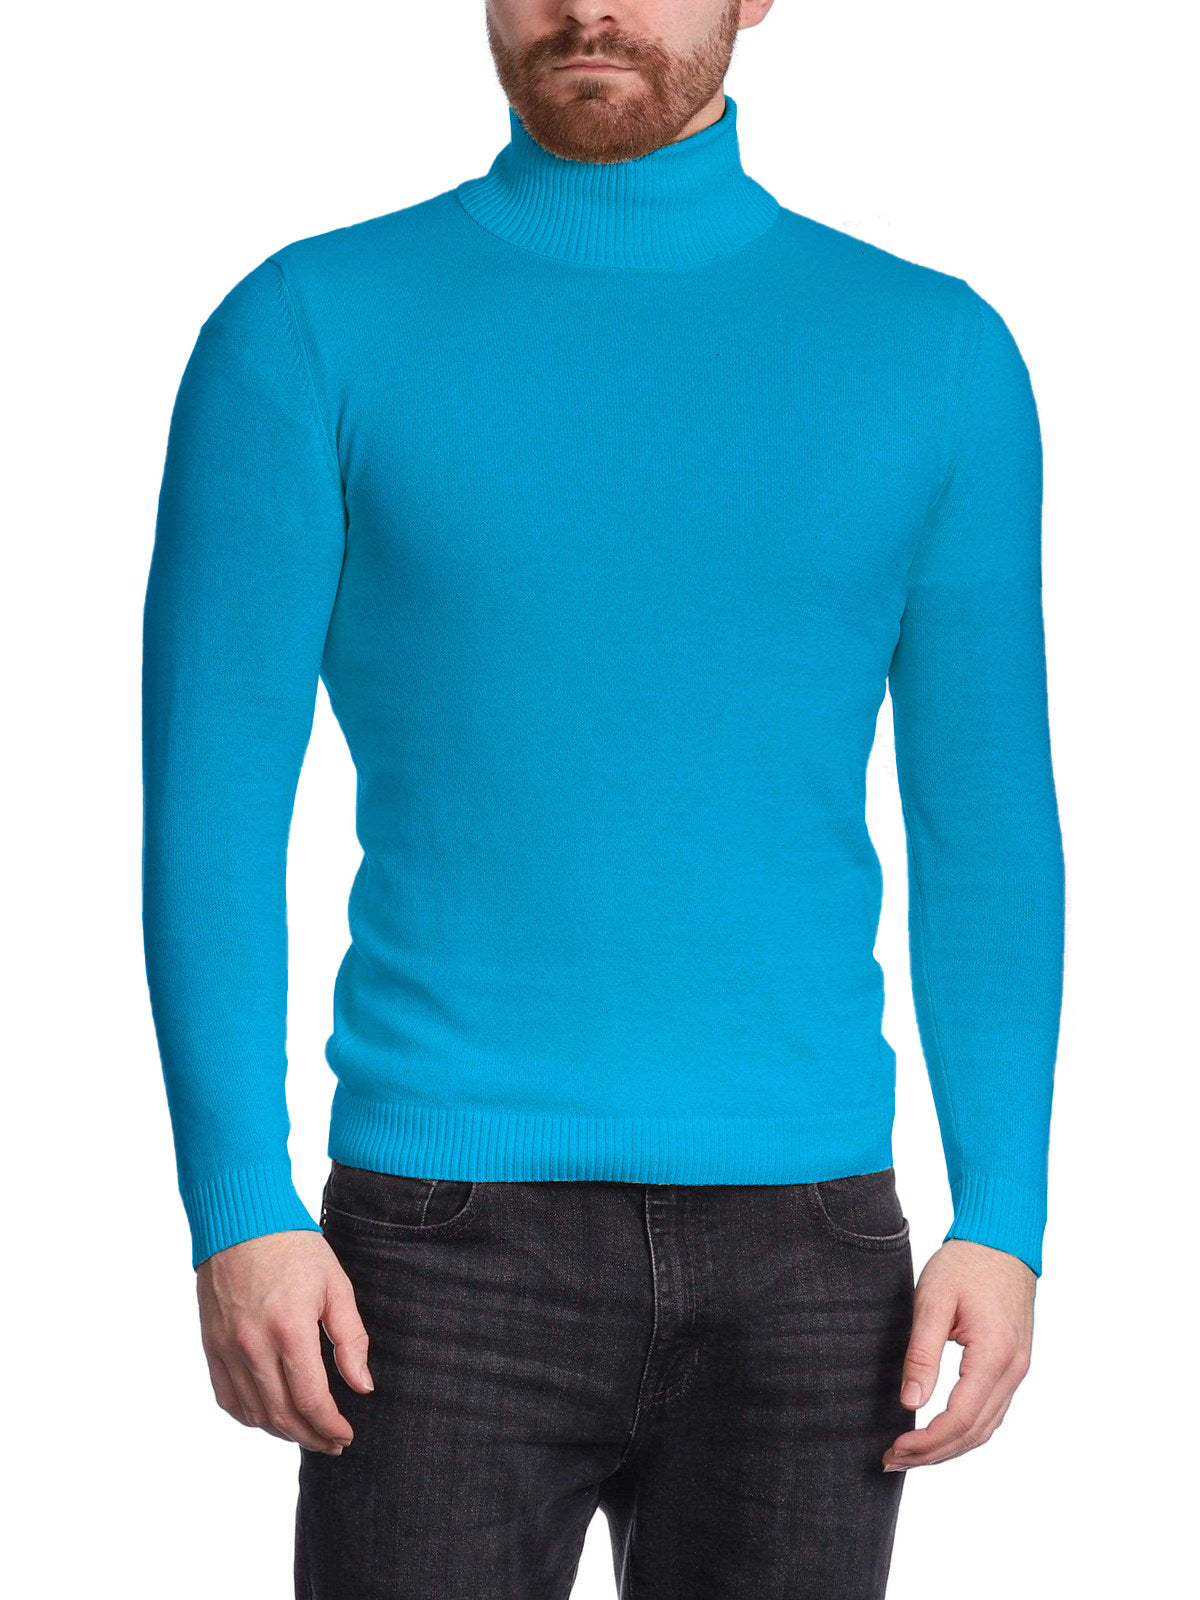 Arthur Black Men&#39;s Caribbean Blue Pullover Cotton Blend Turtleneck Sweater Shirt